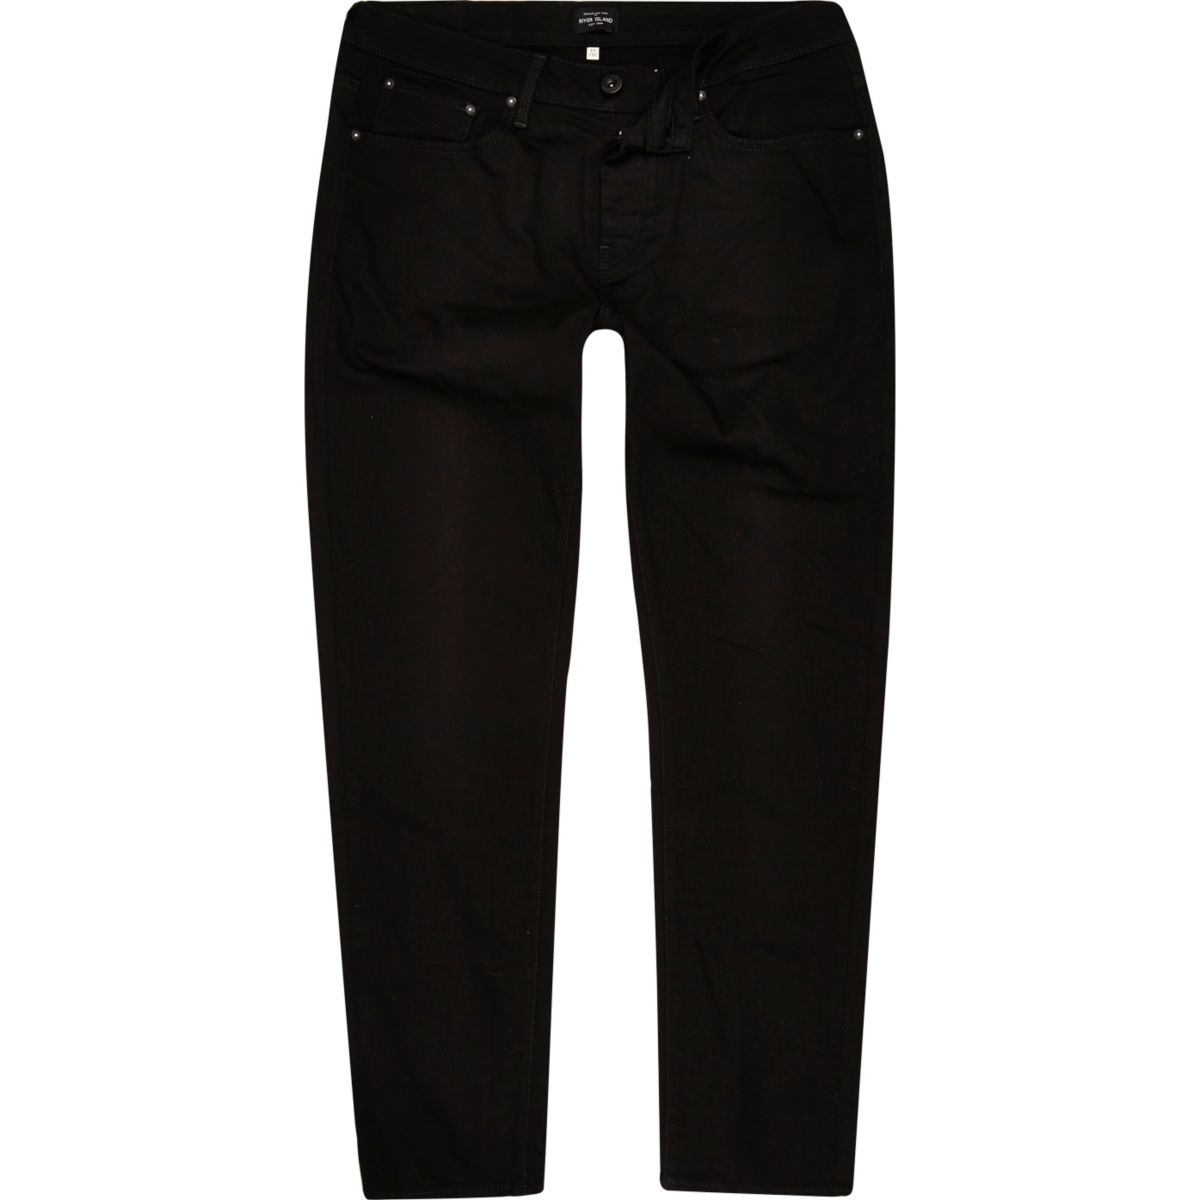 black slim fit tapered jeans